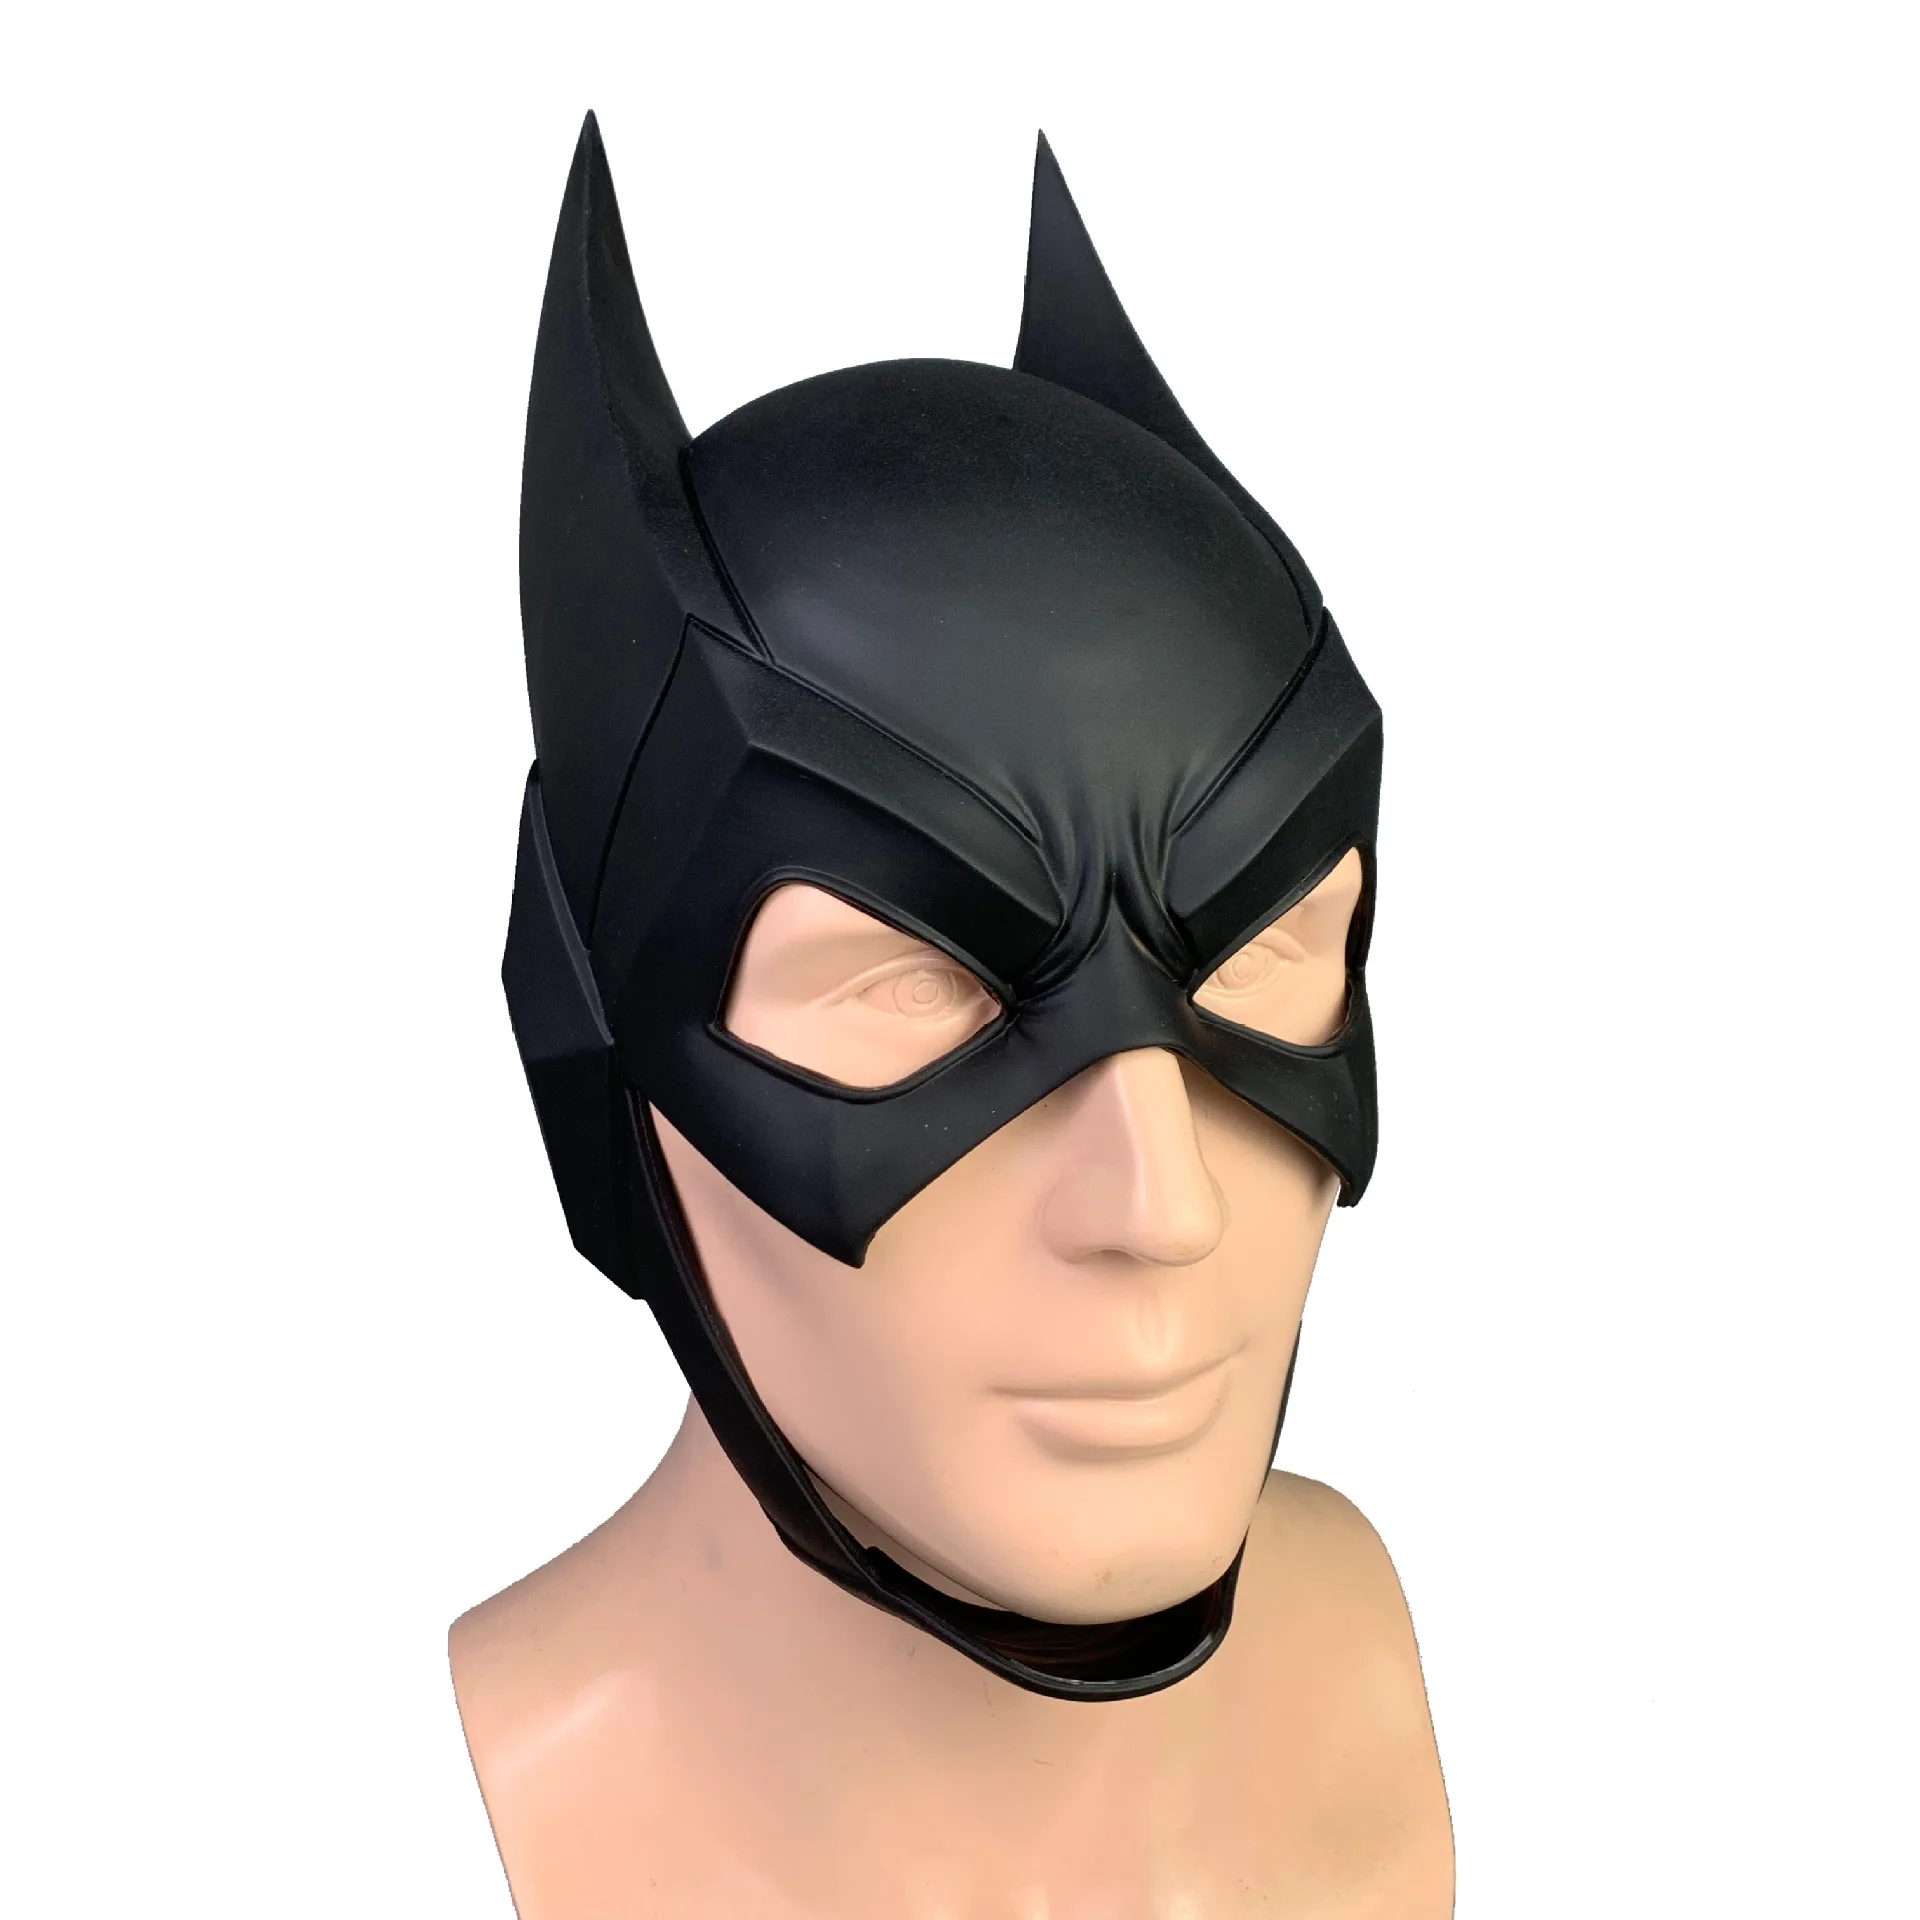 Superhero Cosplay Headgear Halloween The Dark Knight Mask Fancy Dress Party Film Role Play Black Masks Arkham Knight Mask Cos